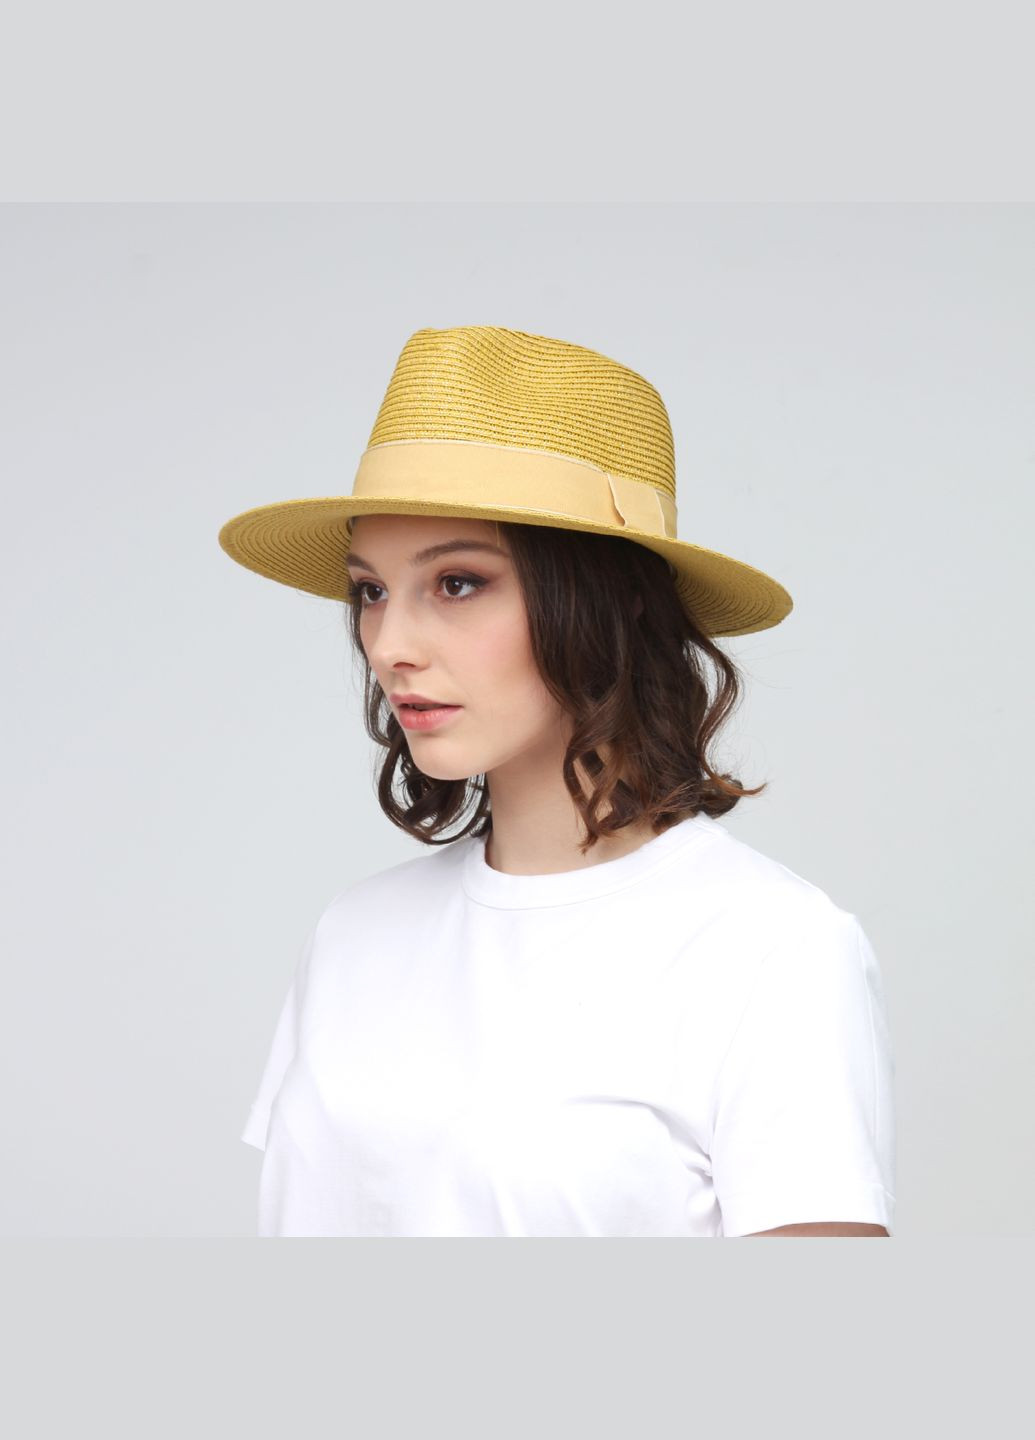 Шляпа федора женская бумага желтая AVA LuckyLOOK 376-725 (289478309)